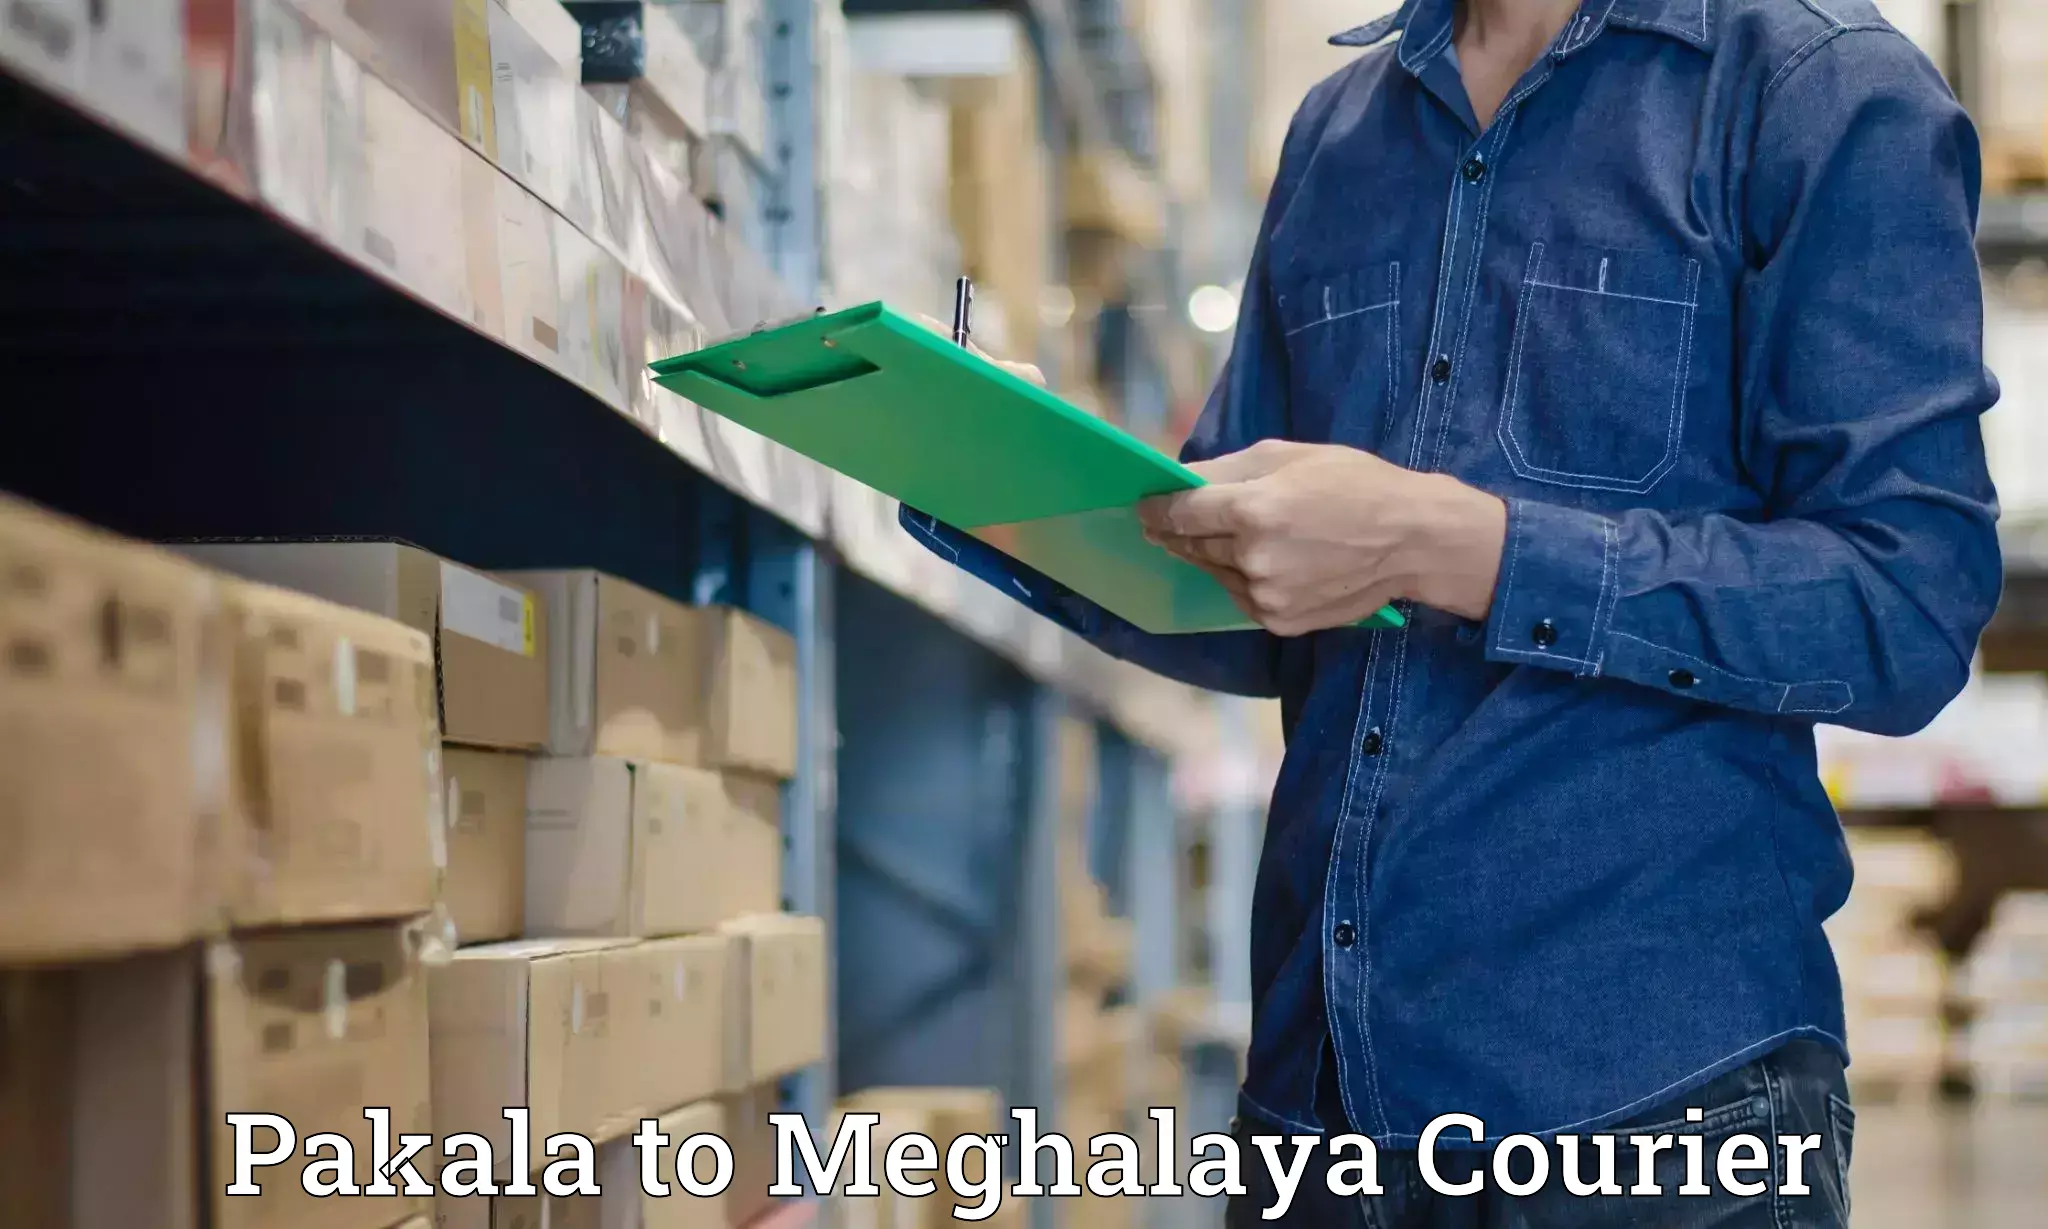 Courier service comparison Pakala to Meghalaya